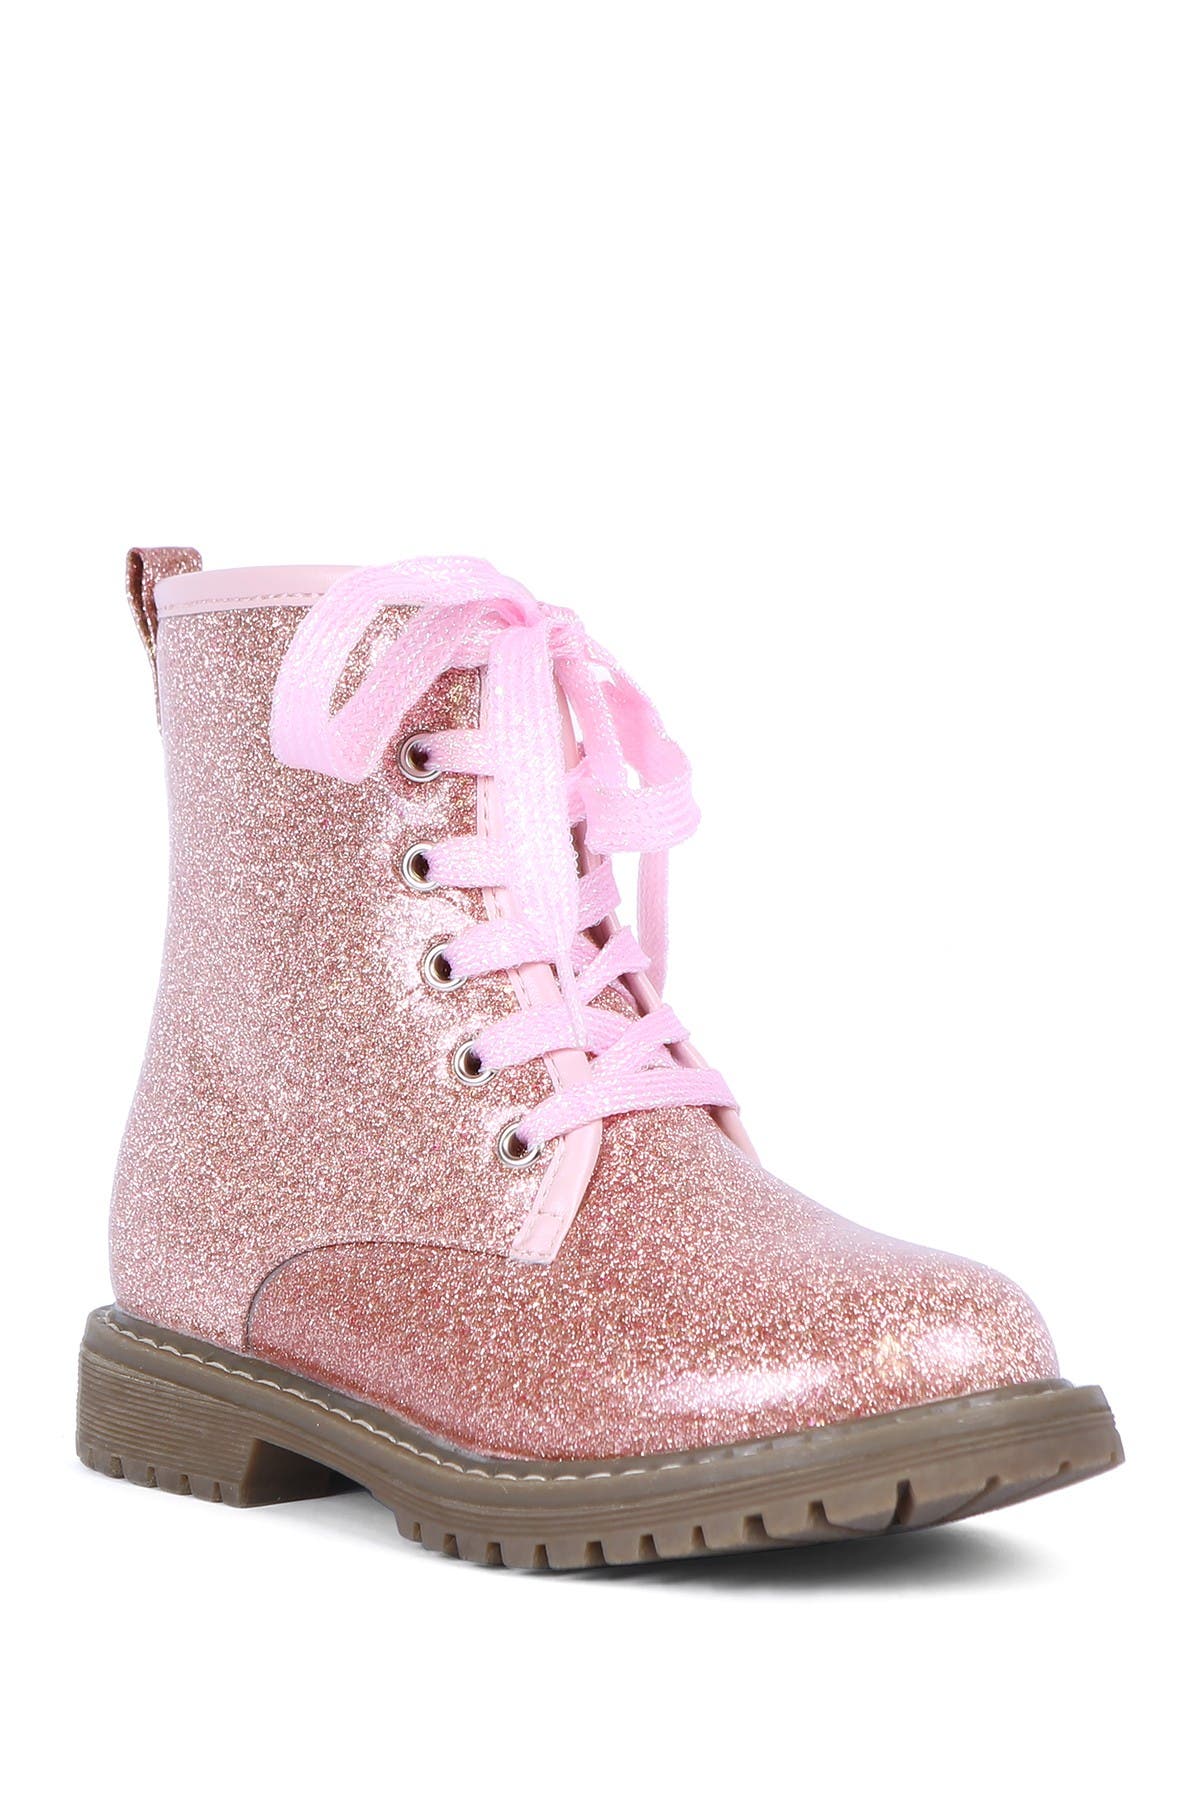 Girls' Fashion Boots | Nordstrom Rack